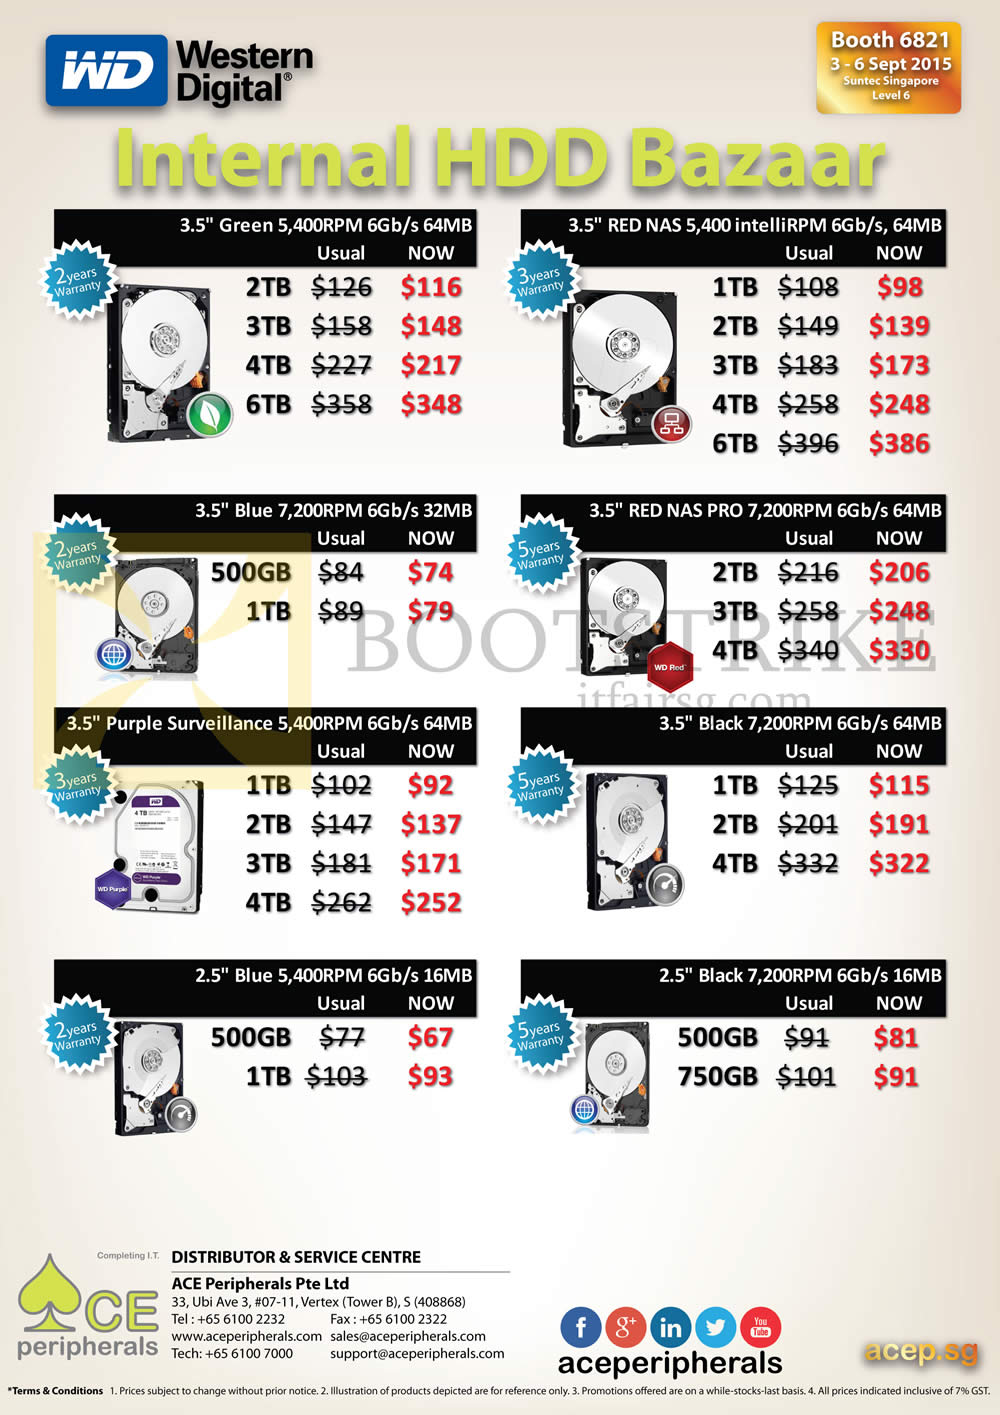 COMEX 2015 price list image brochure of Ace Peripherals Inter HDD Bazaar WD Green, Red, Black, Purple Surveillance, Red NAS 500GB, 1TB, 2TB, 3TB, 4TB, 6TB